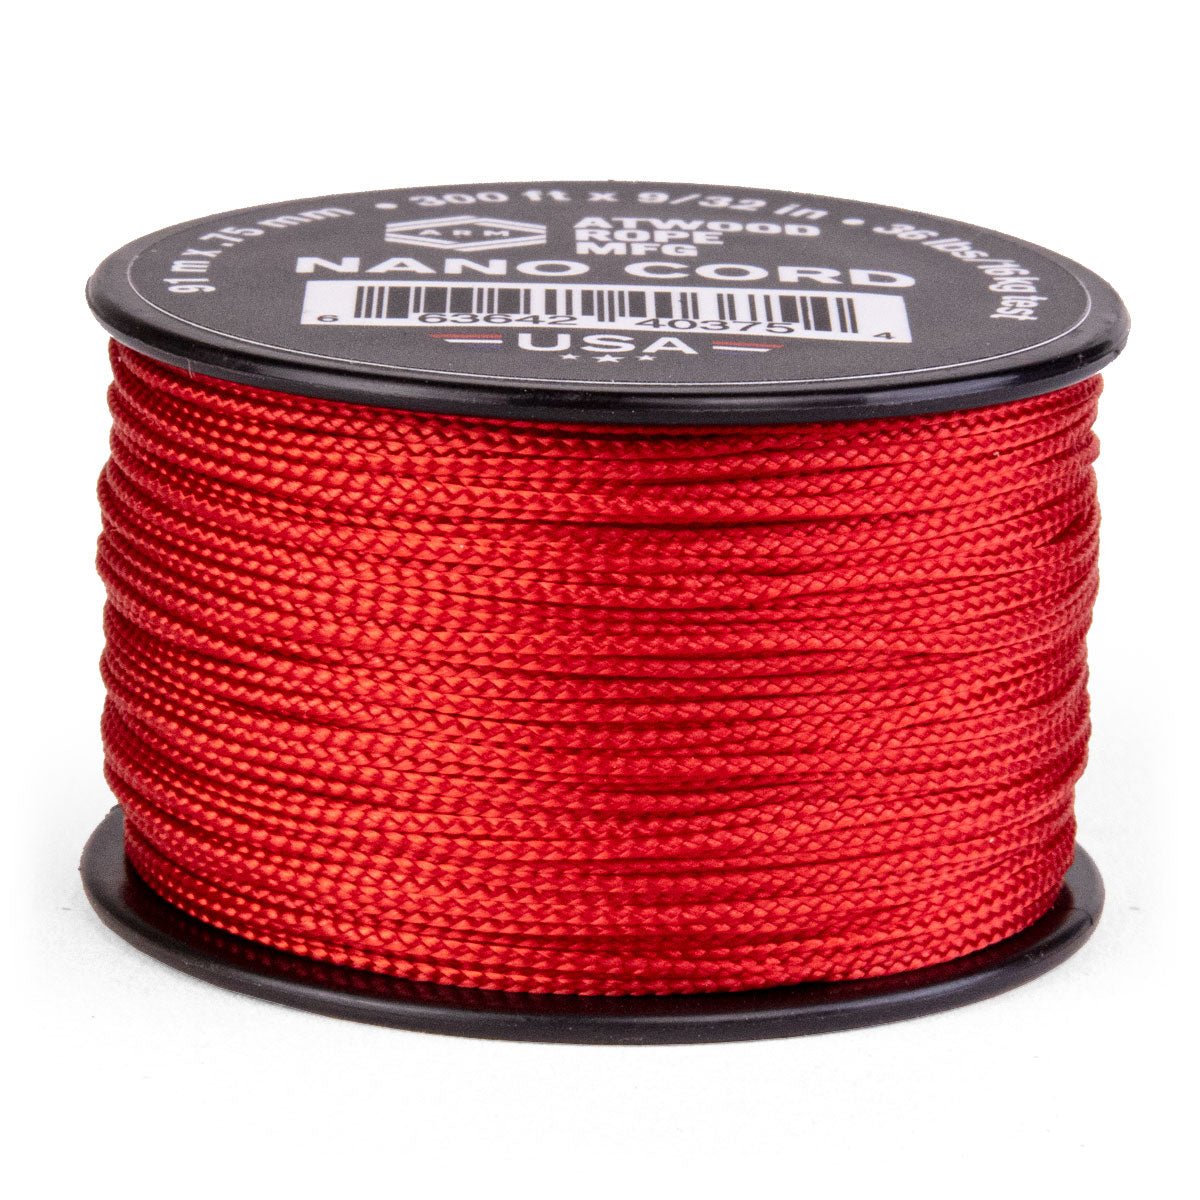 3/8 Kevlar - Red – Atwood Rope MFG